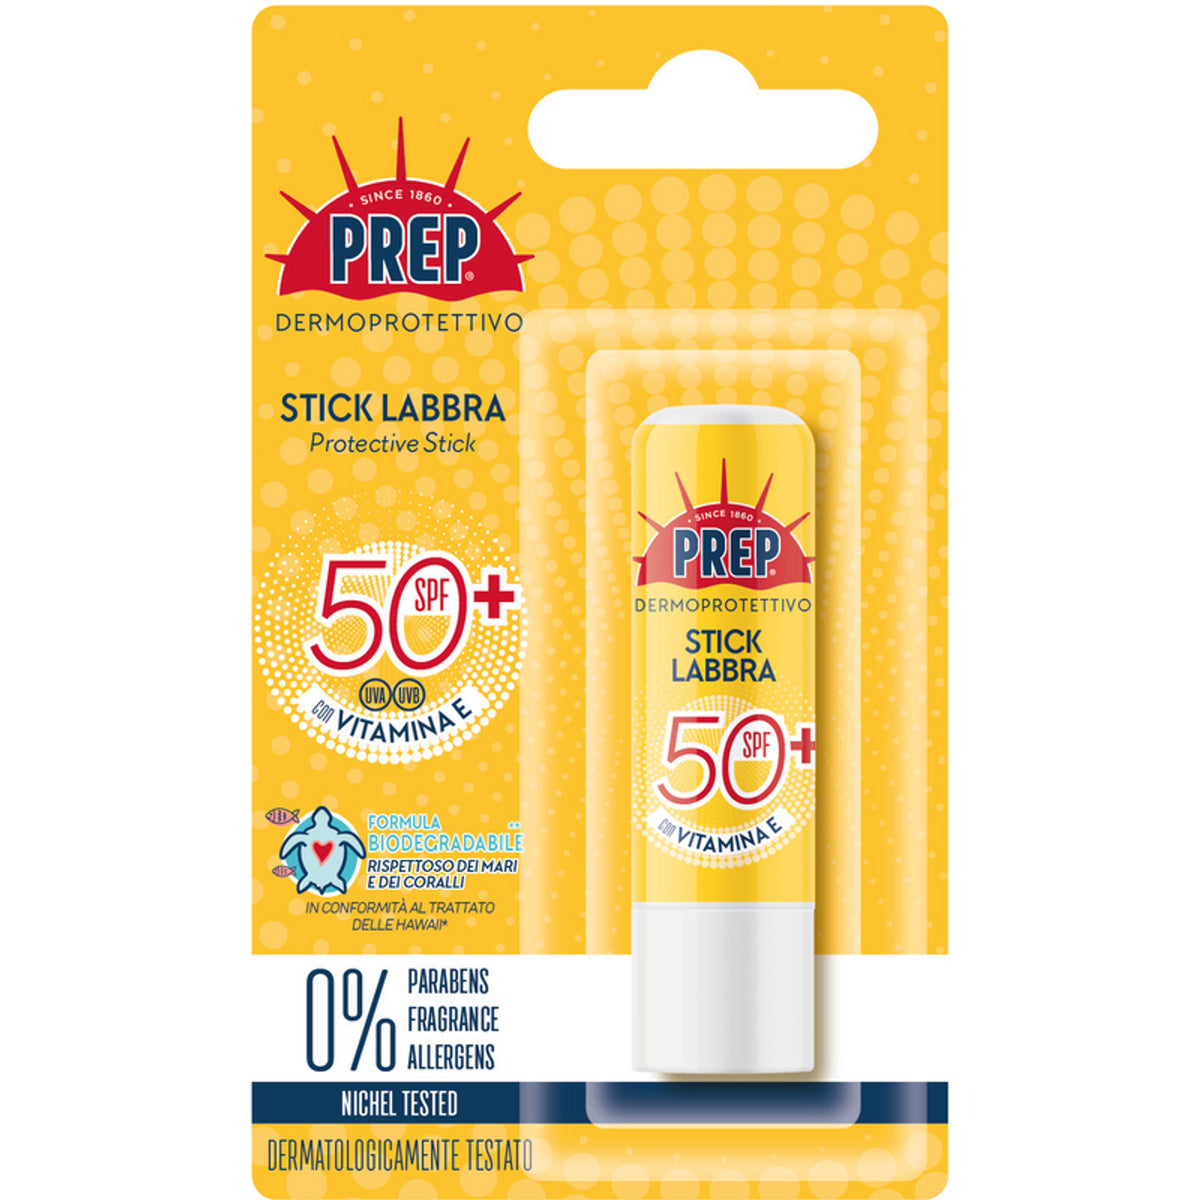 Solar Prep SPRF50+ lipstick met vitamine E